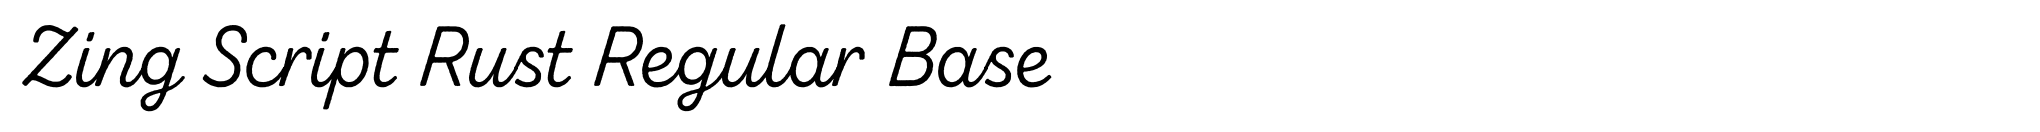 Zing Script Rust Regular Base image